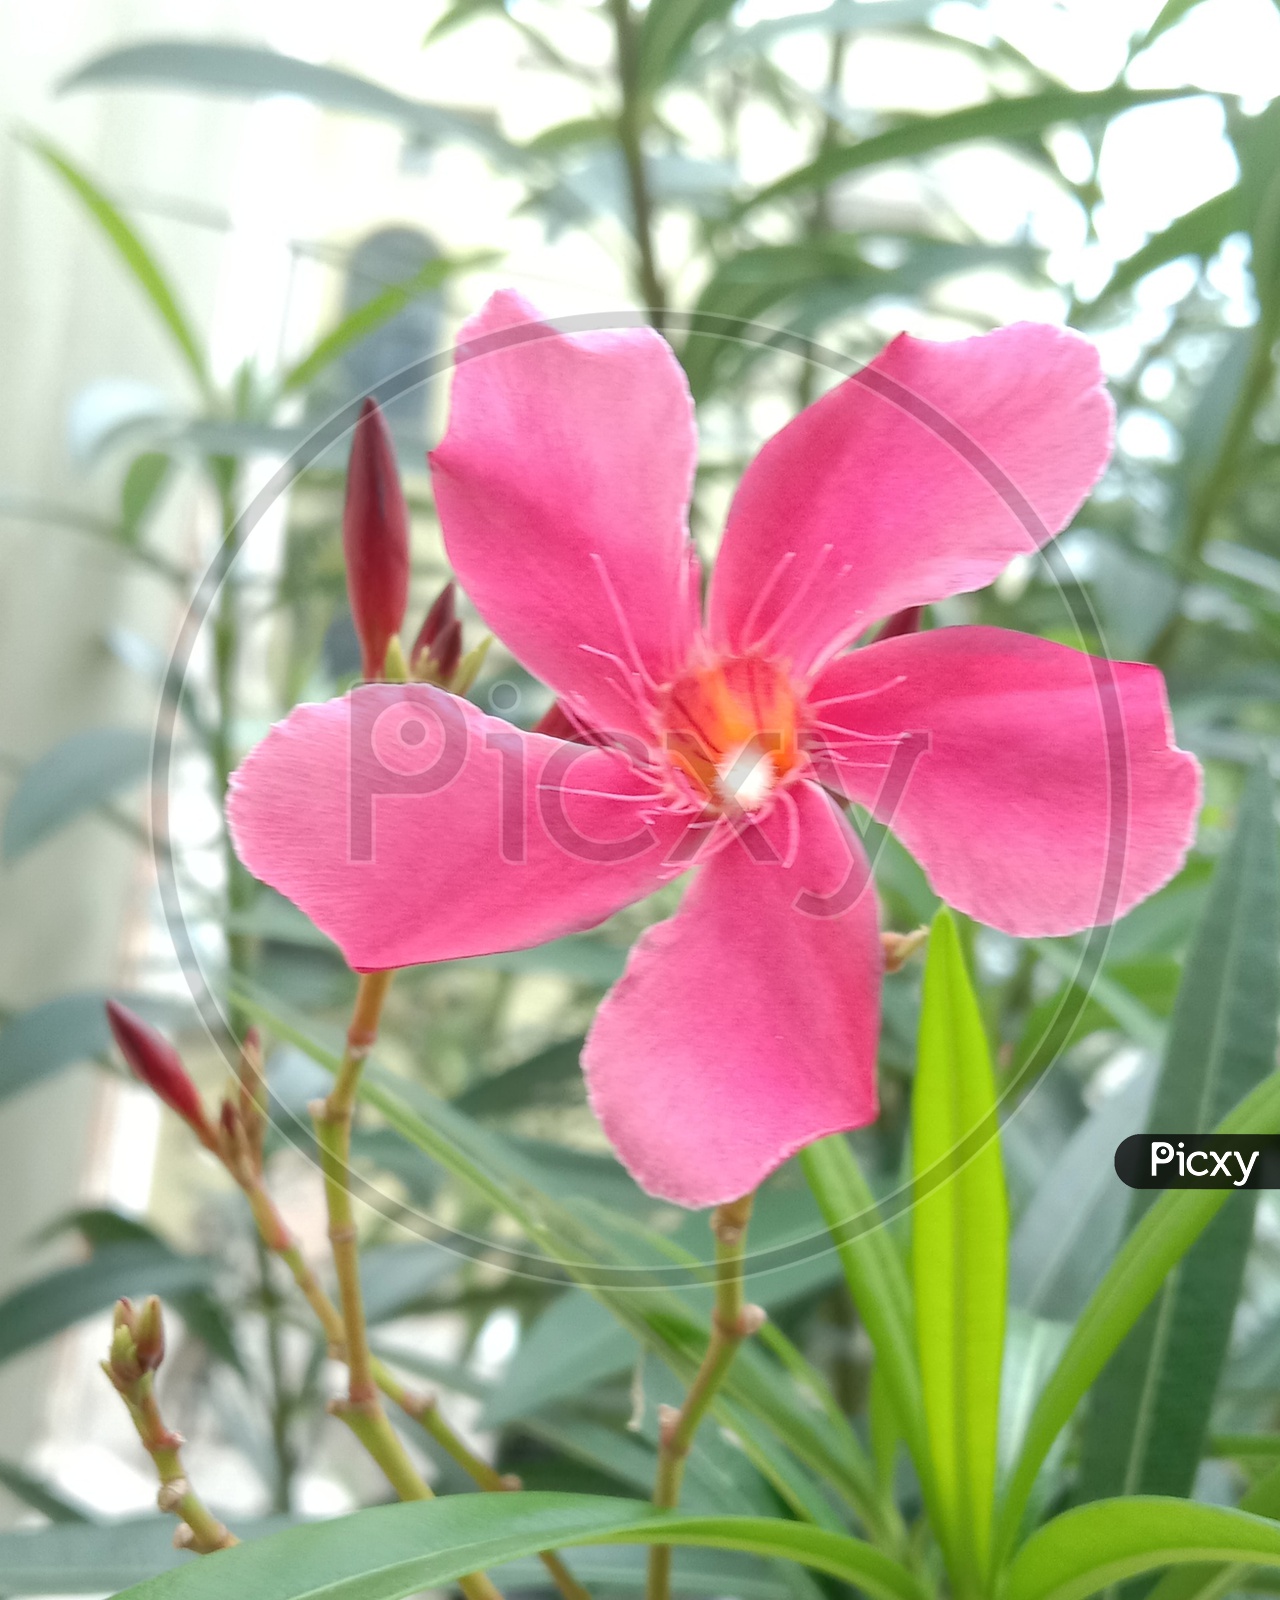 Pink Flower Closeup Blooming on Tree